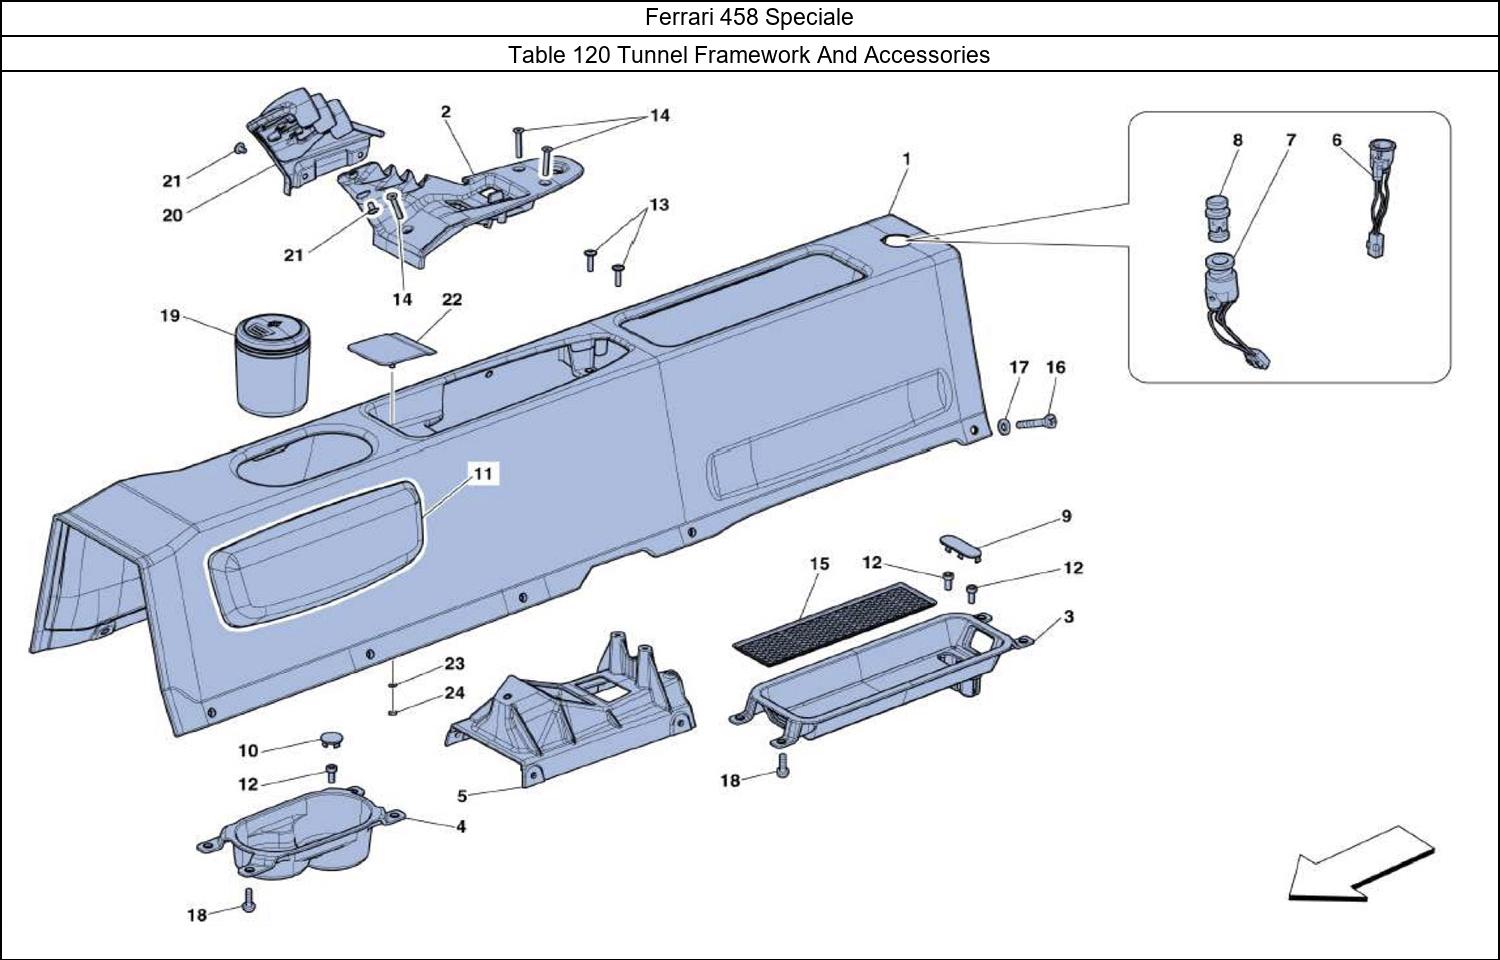 Ferrari Parts Ferrari 458 Speciale Table 120 Tunnel Framework And Accessories